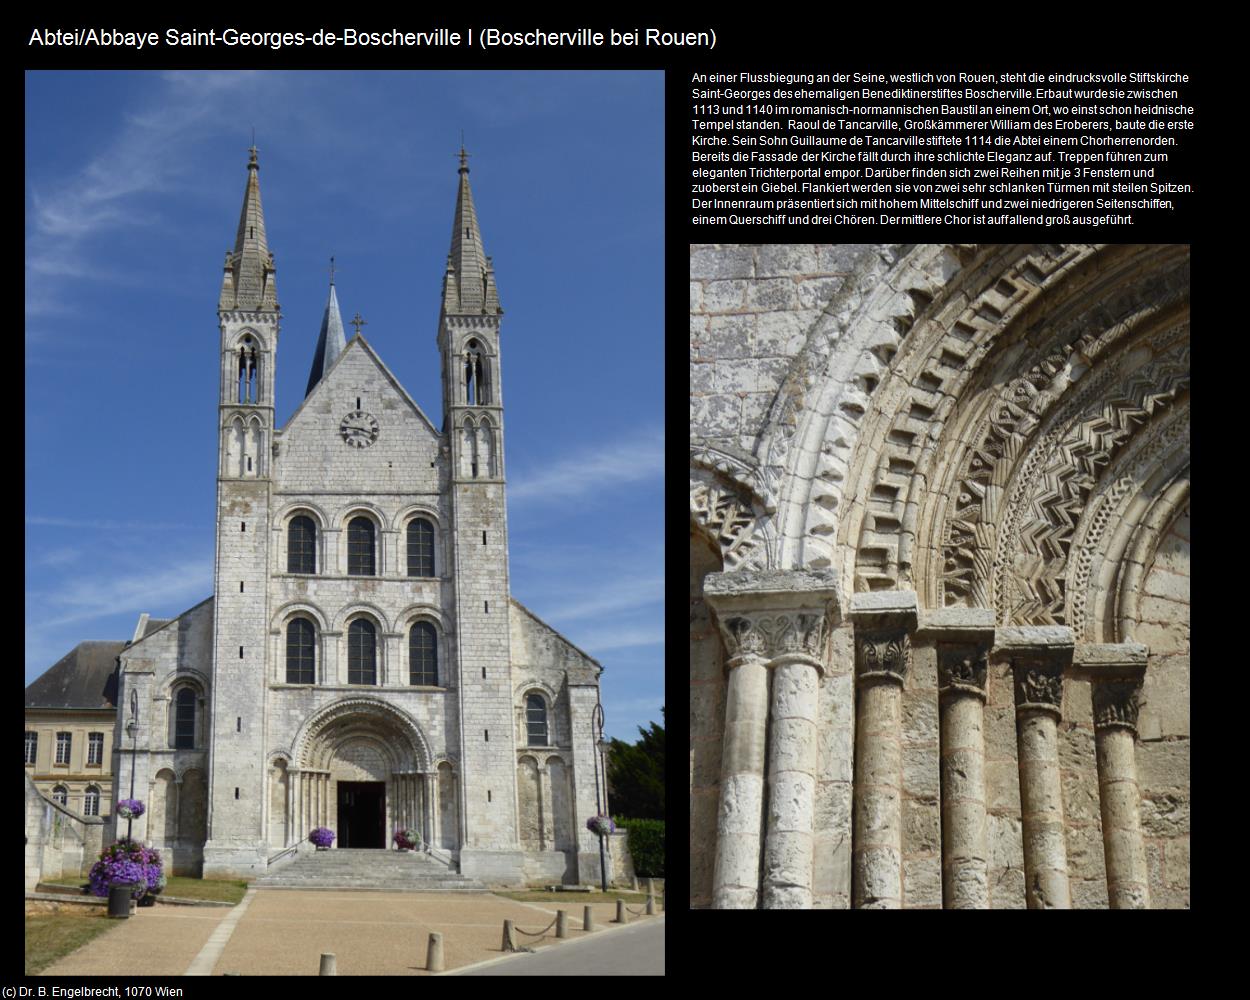 Abbaye Saint-Georges I (Boscherville bei Rouen (FR-NOR)) in Kulturatlas-FRANKREICH